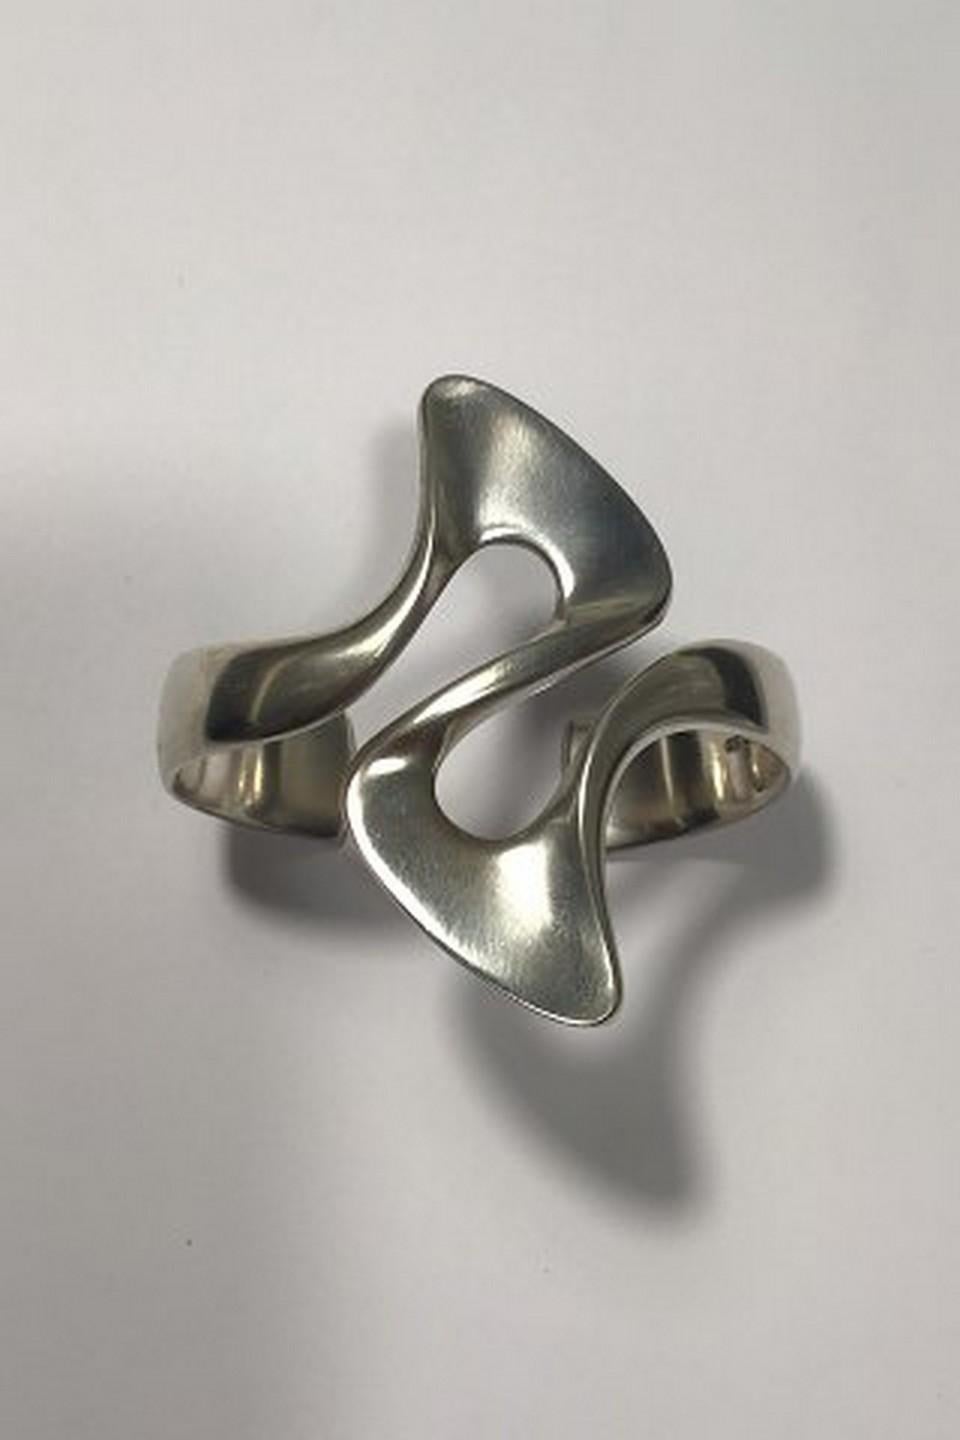 Georg Jensen Sterling Silver Arm Ring No 287 Henning Koppel Ins 
Diam 6.3 cm (2½ in) 
Weight 84.5 gr/2.98 oz
Item no.: 437586